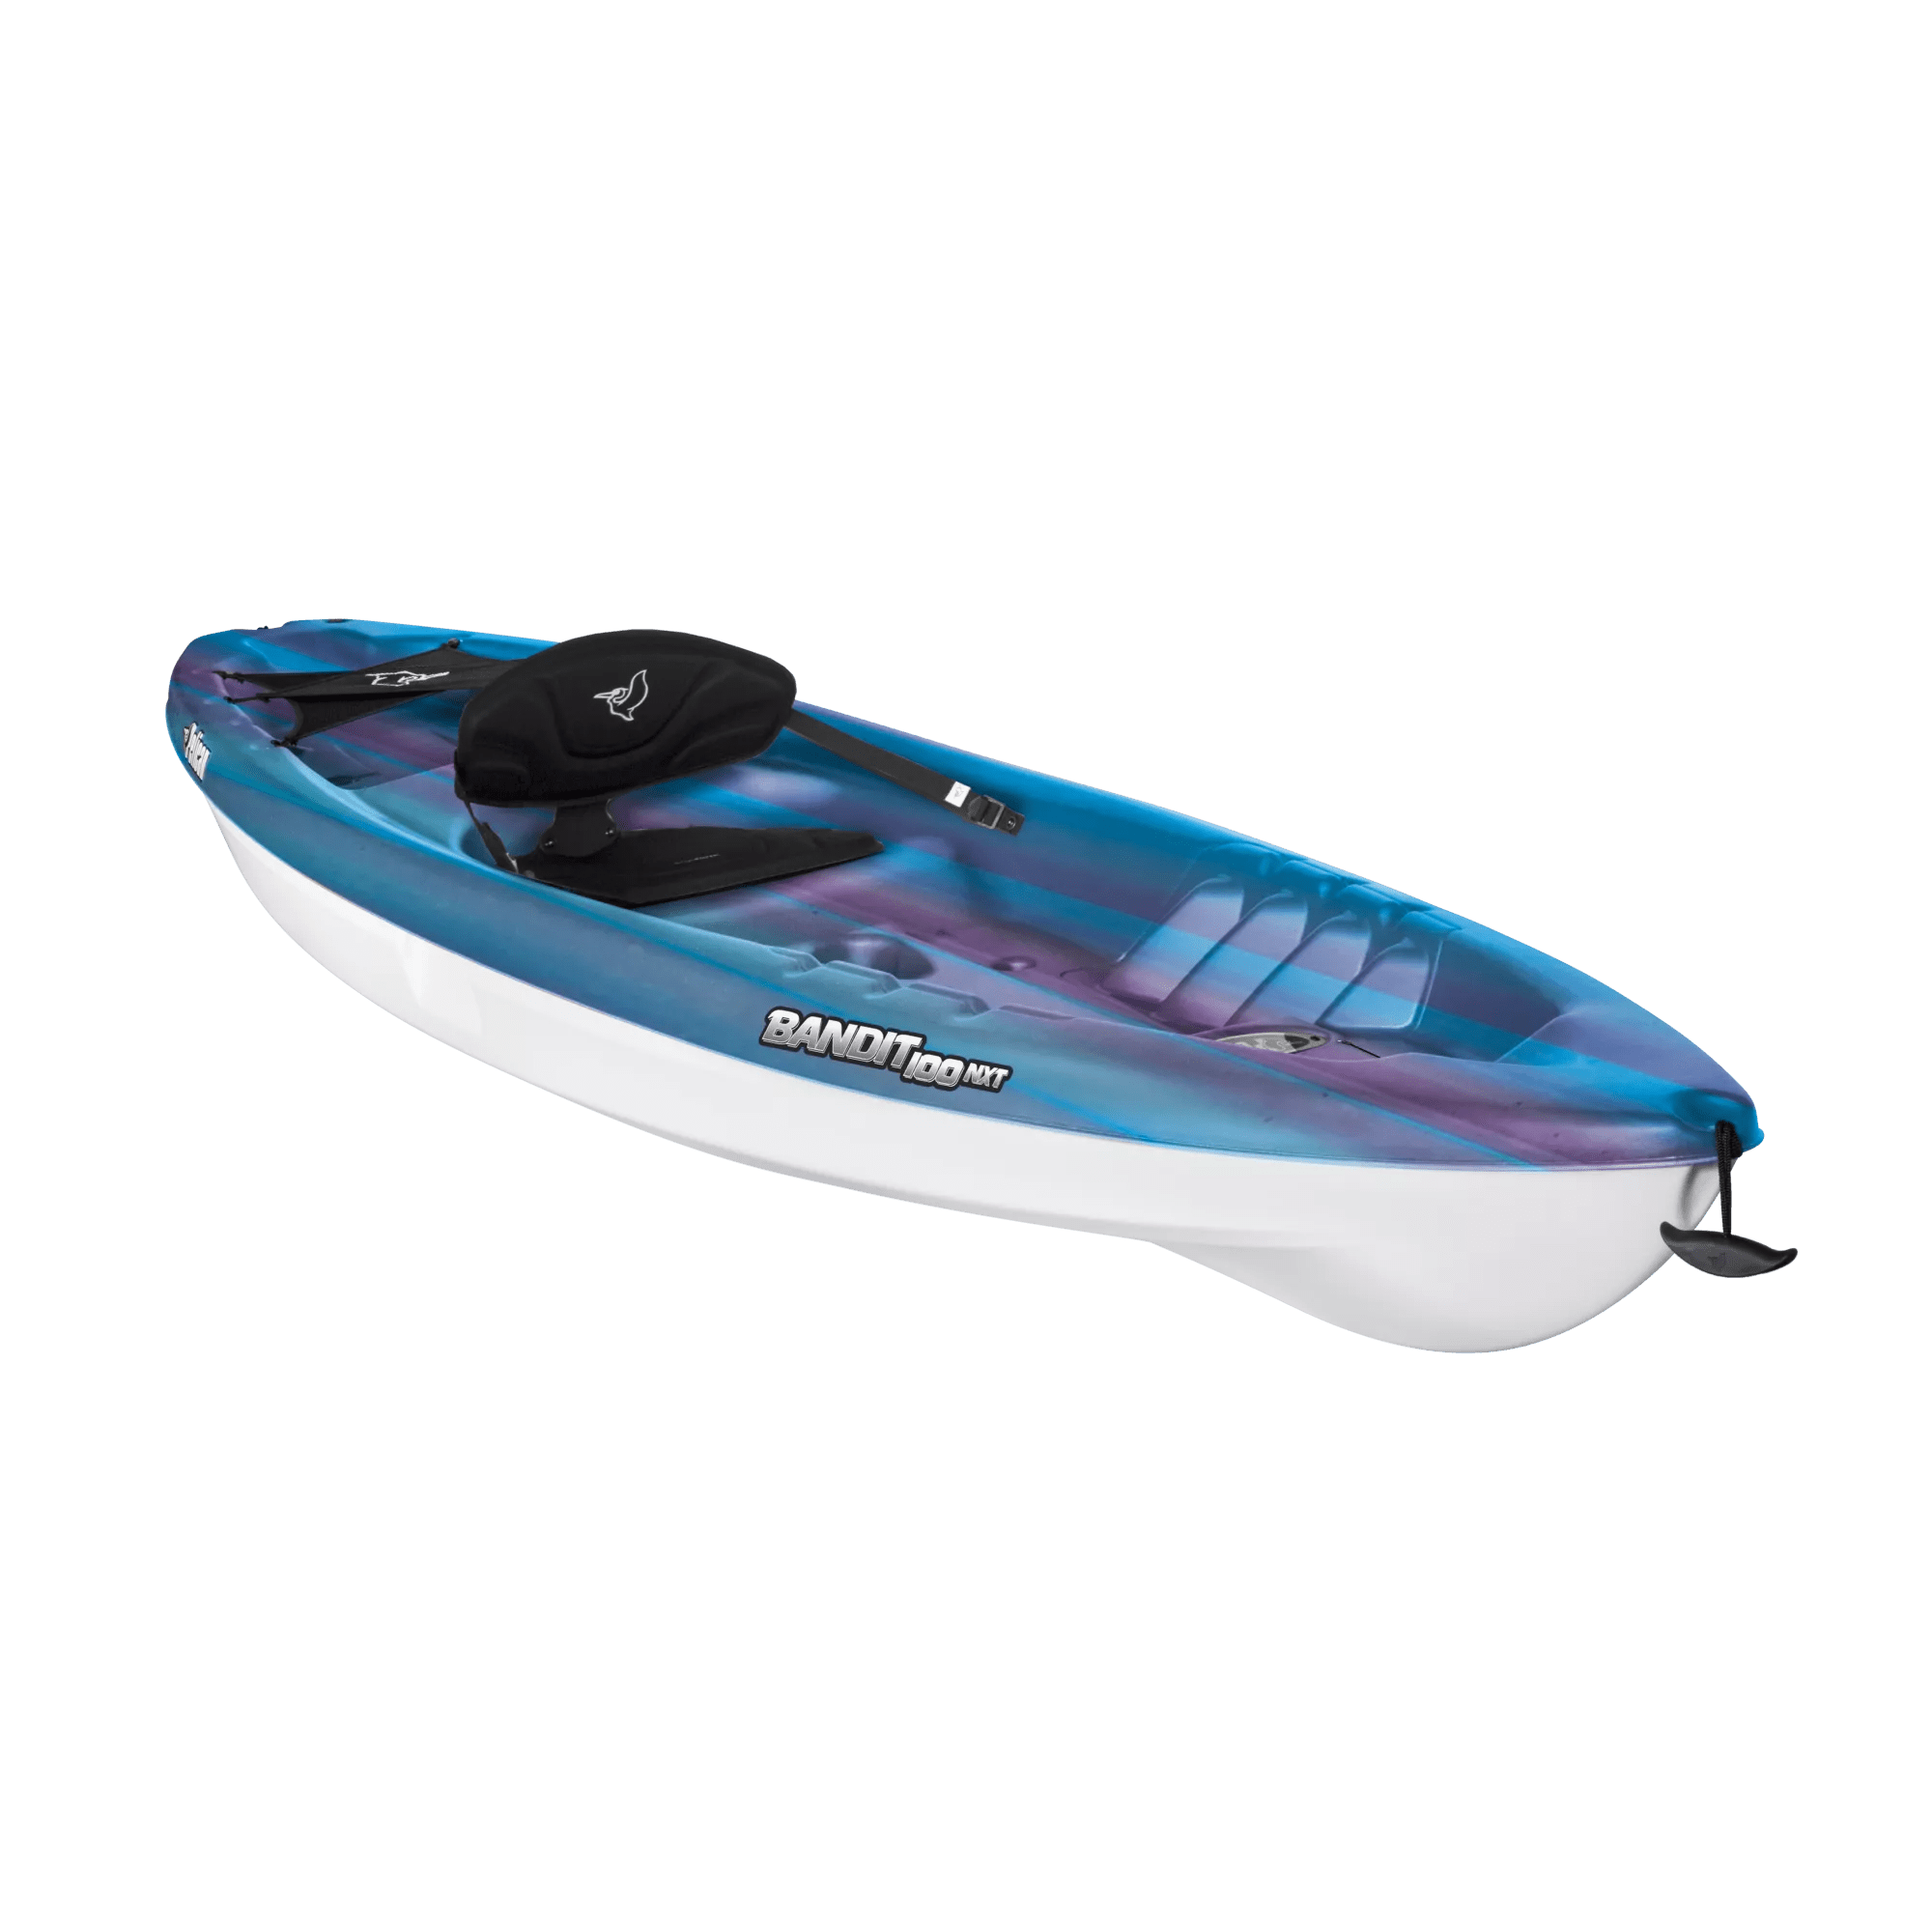 PELICAN - Bandit 100NXT Recreational Kayak - Blue - KVF10P303 - ISO